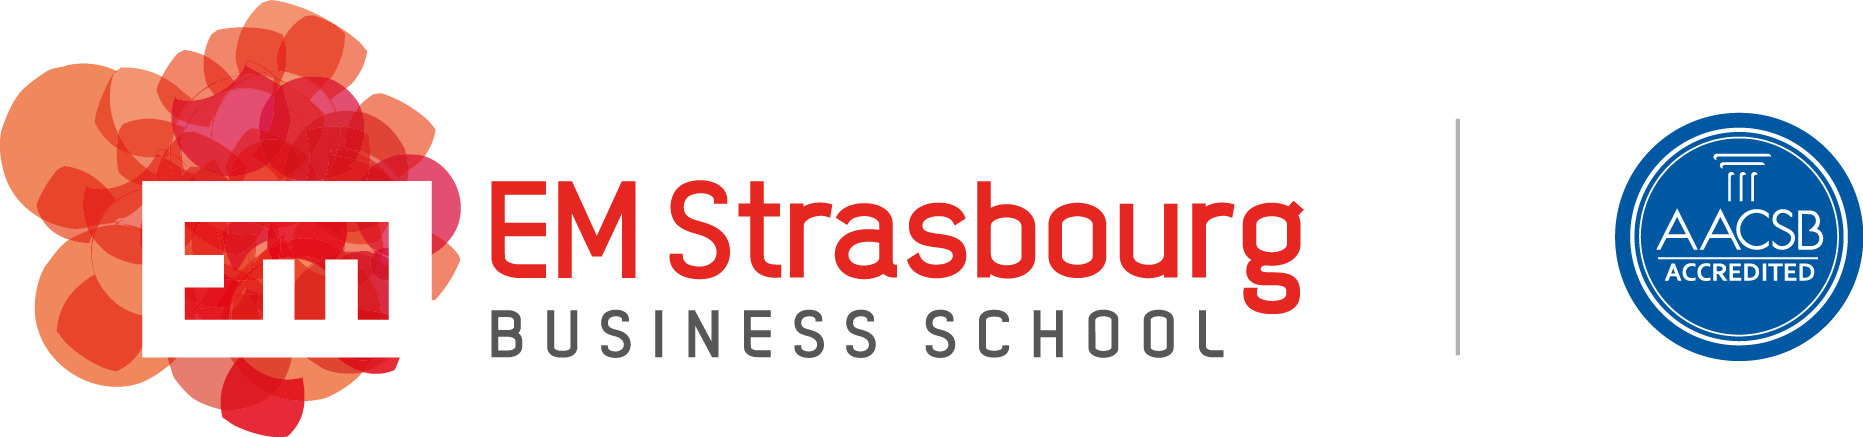 EM Strasbourg - Business School